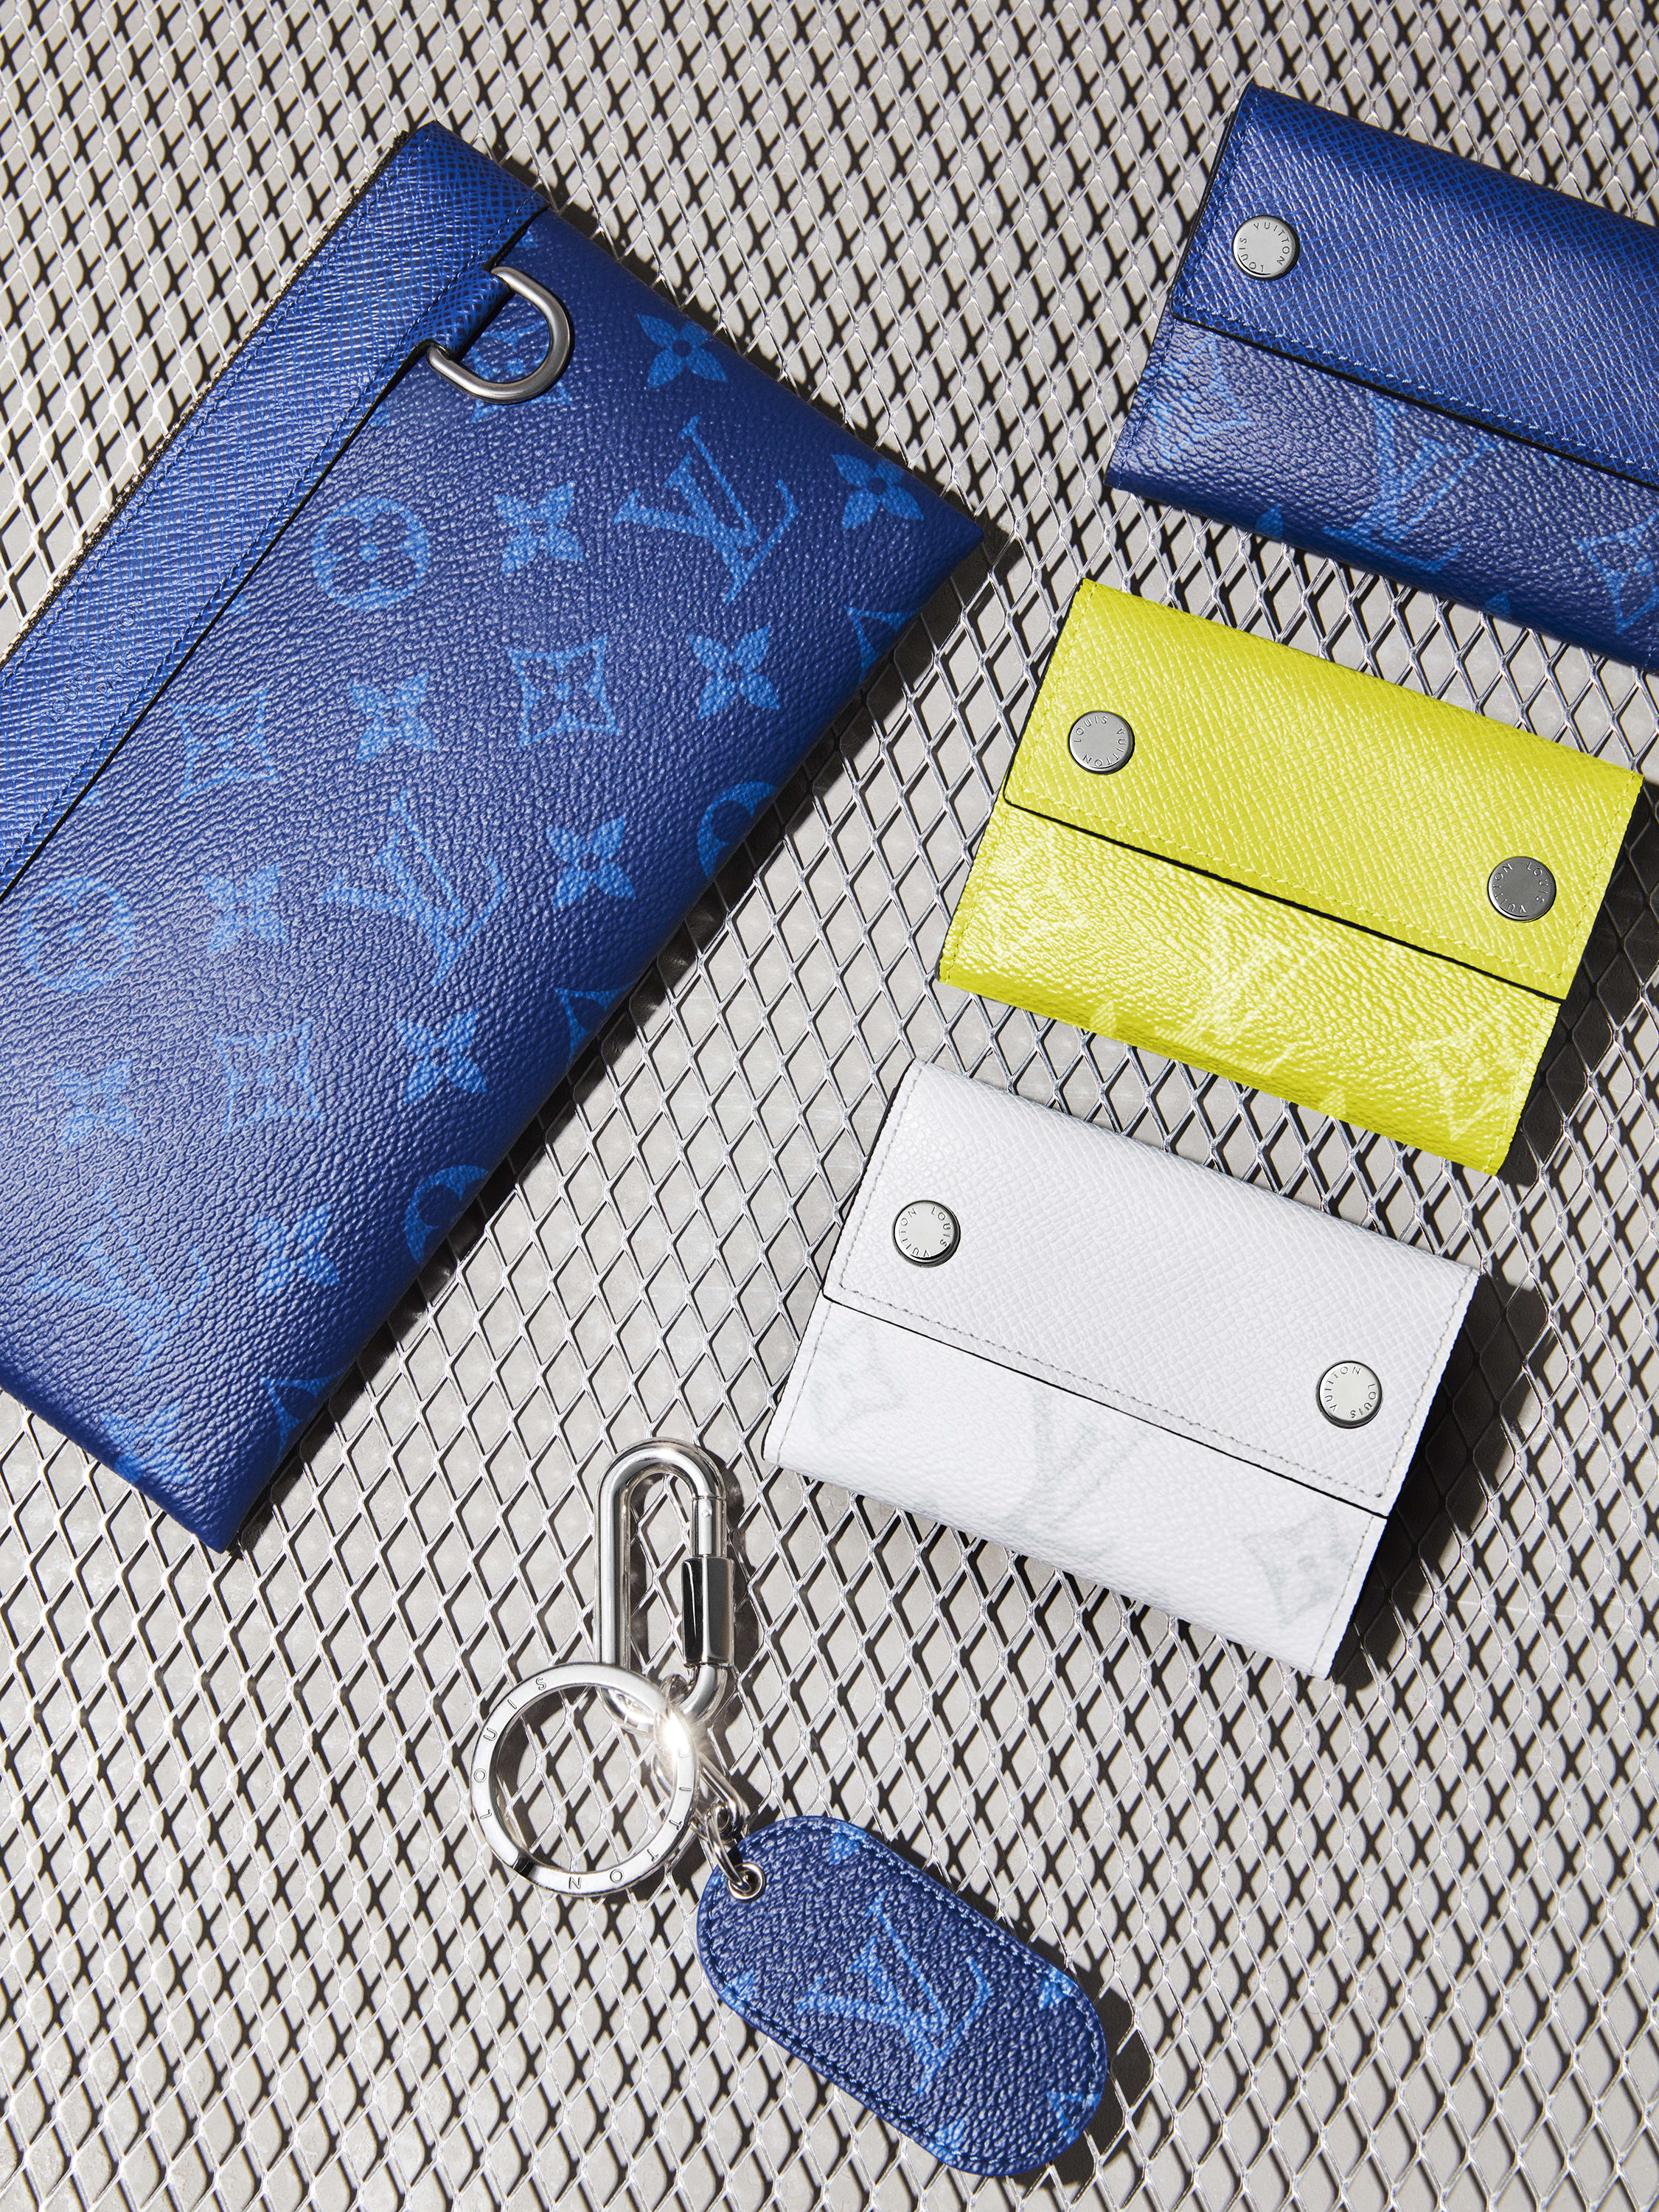 Louis Vuitton Unveils Its New Taïgarama Leather Goods Line